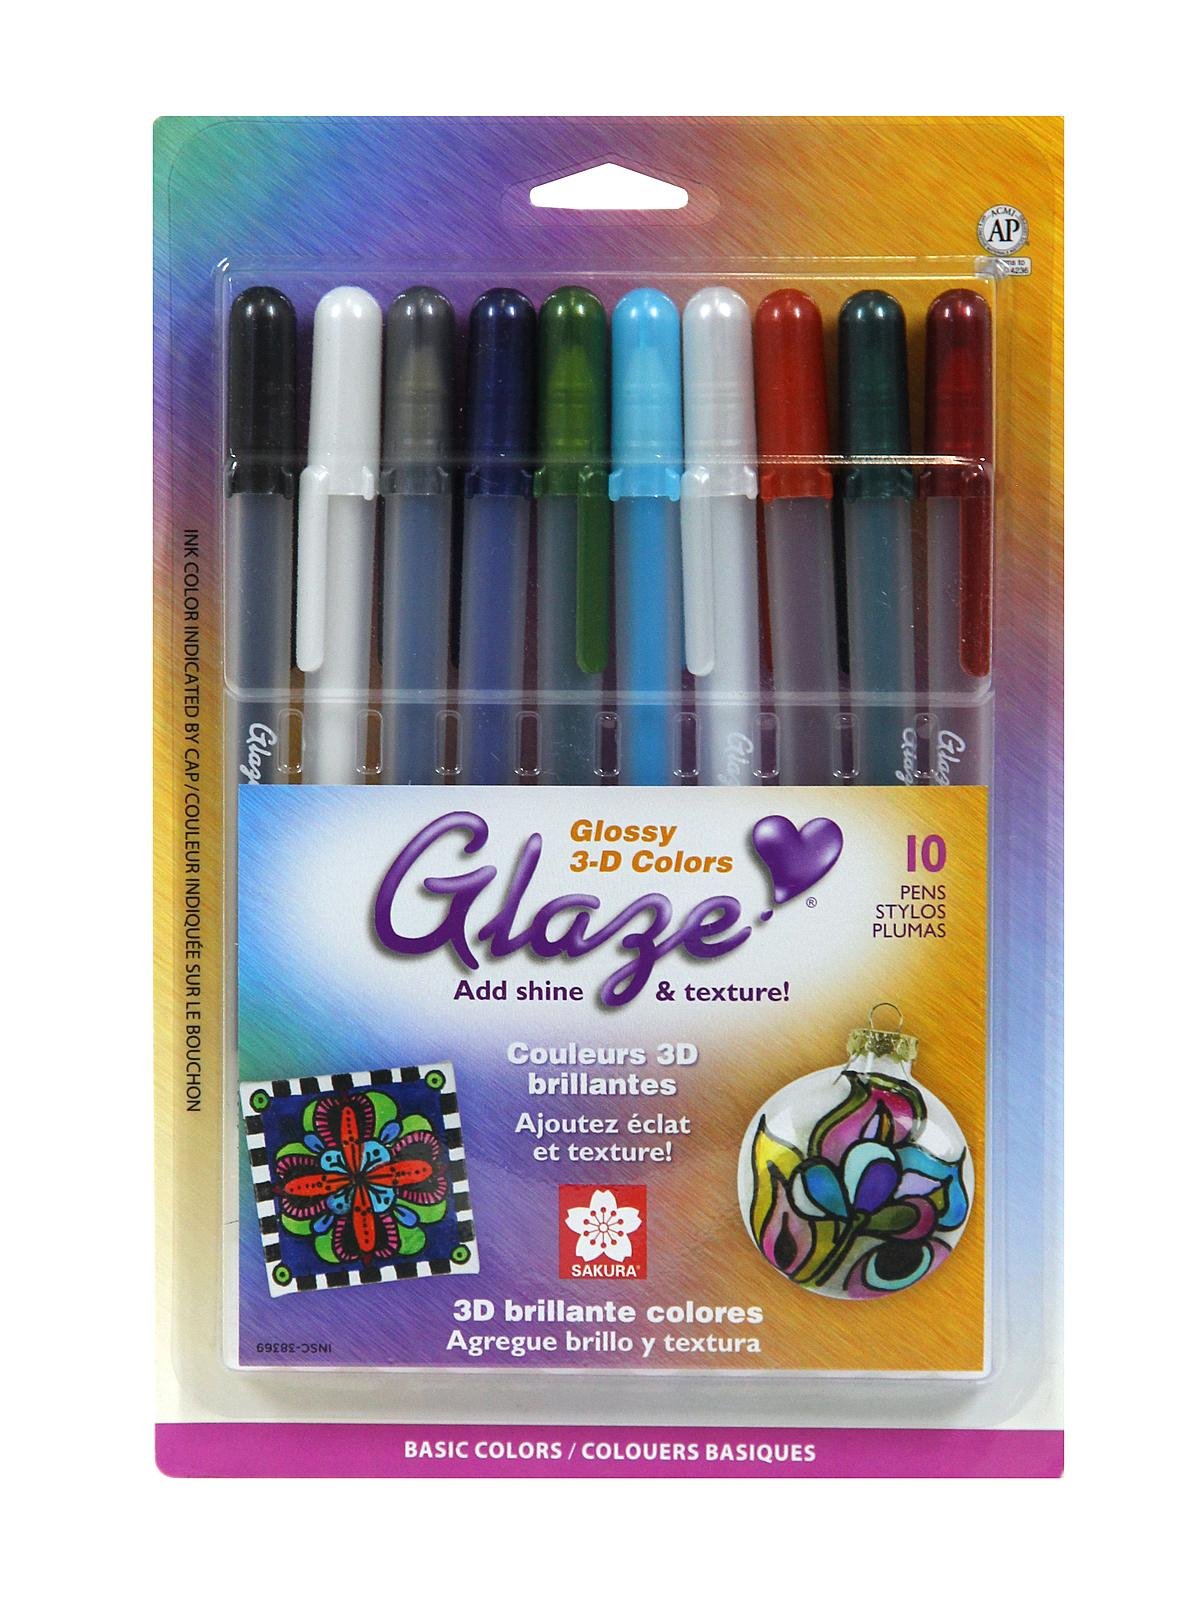 Black Gelly Roll Glaze Pens (2)